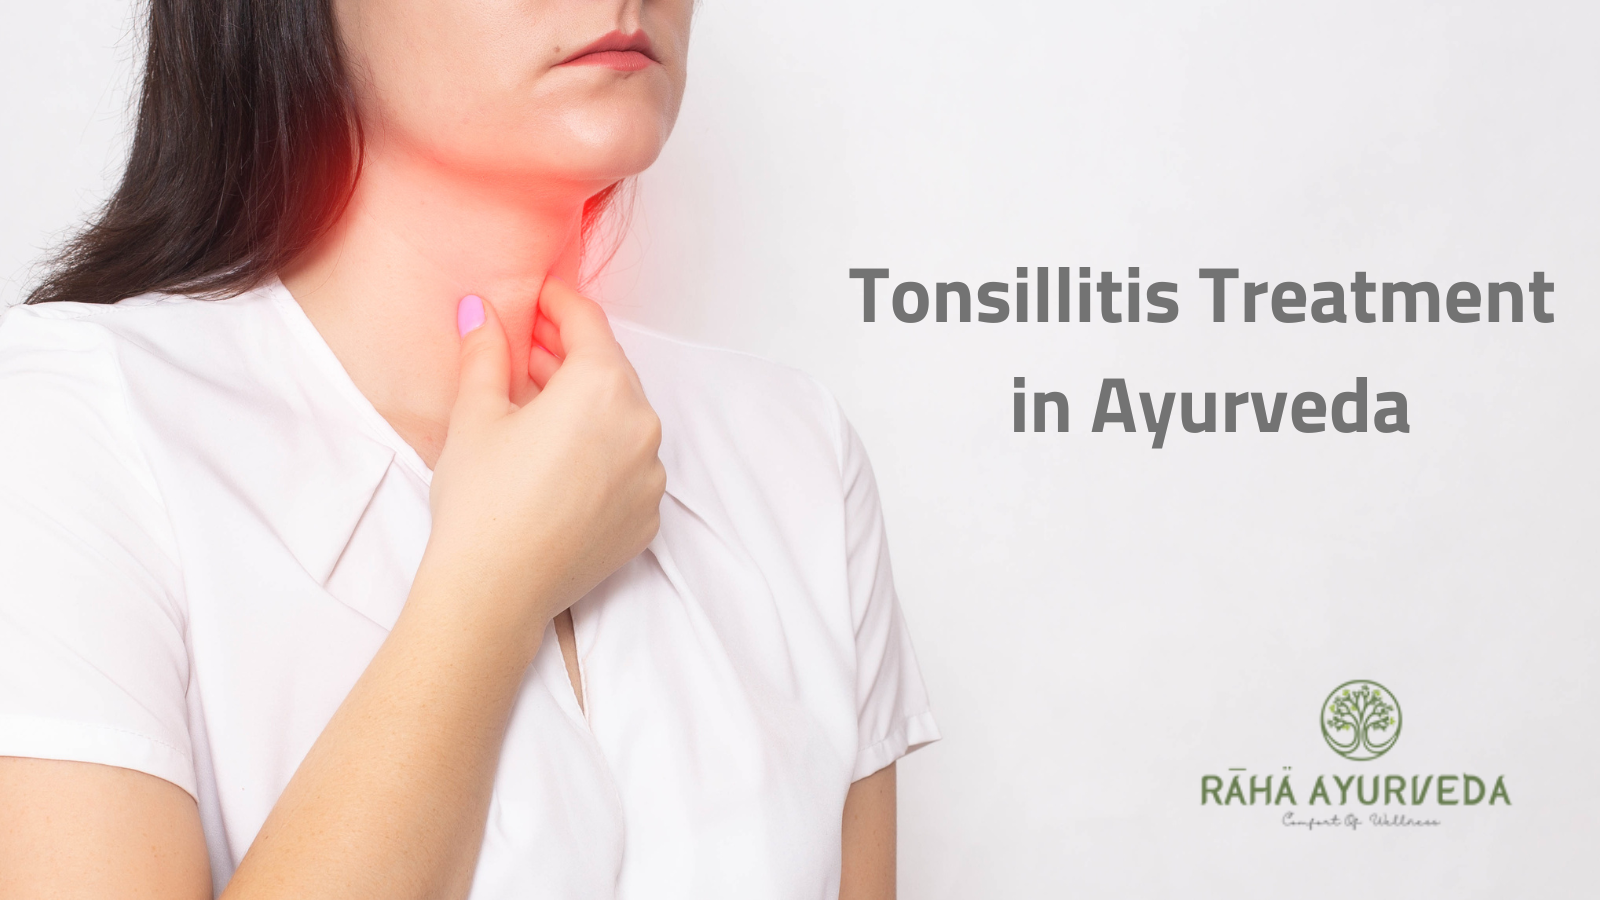 How to cure Tonsillitis through Ayurveda